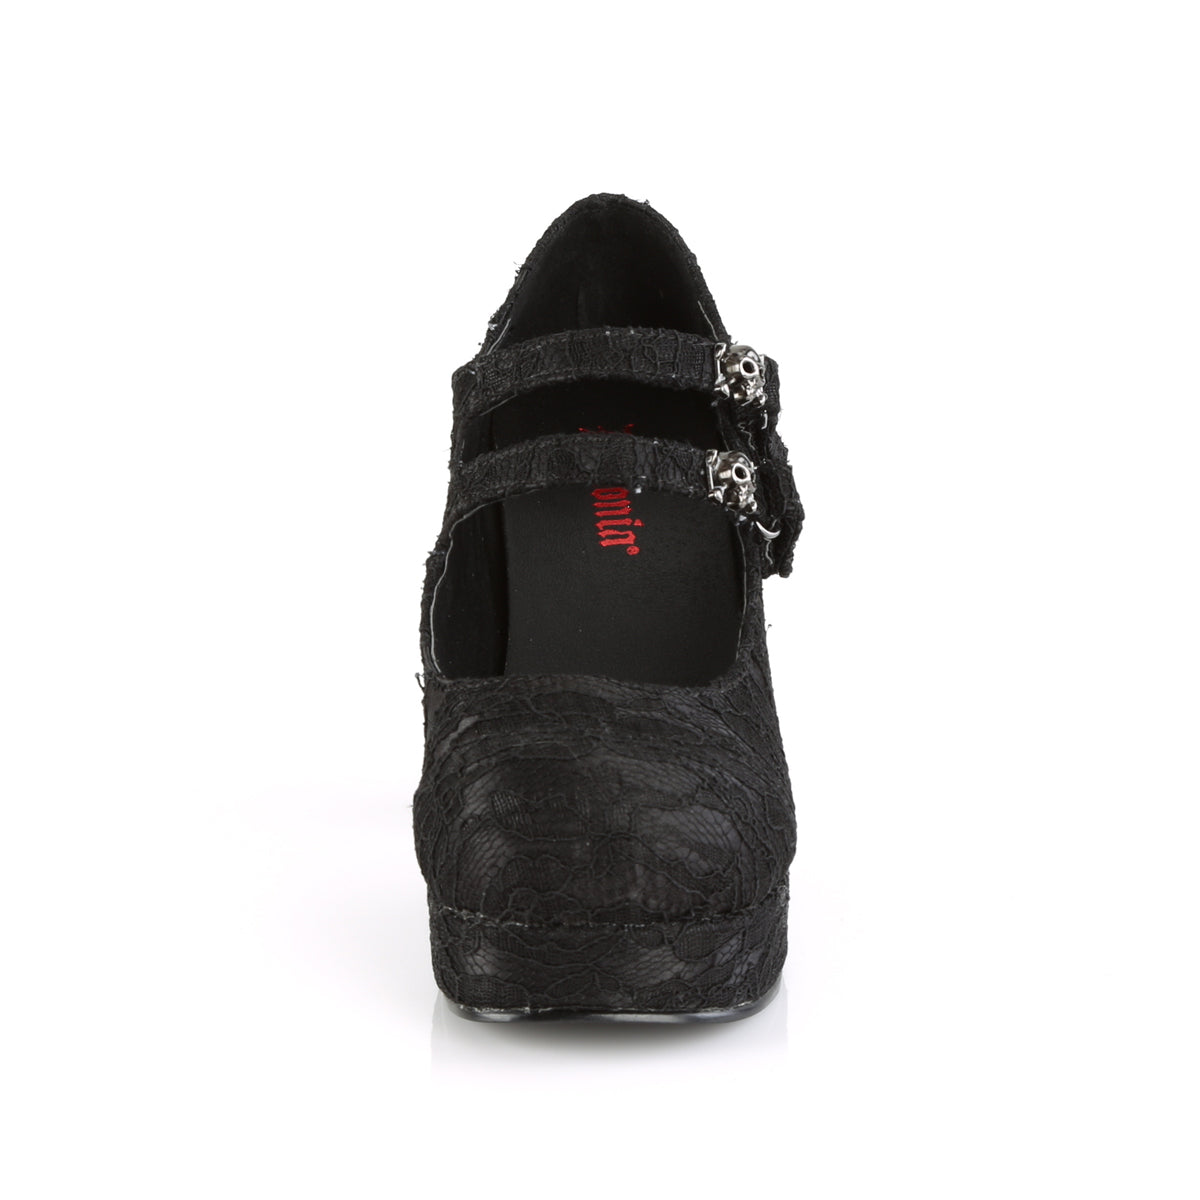 GOTHIKA-09 Demonia Black Satin-Lace Women's Heels & Platform Shoes [Demonia Cult Alternative Footwear]